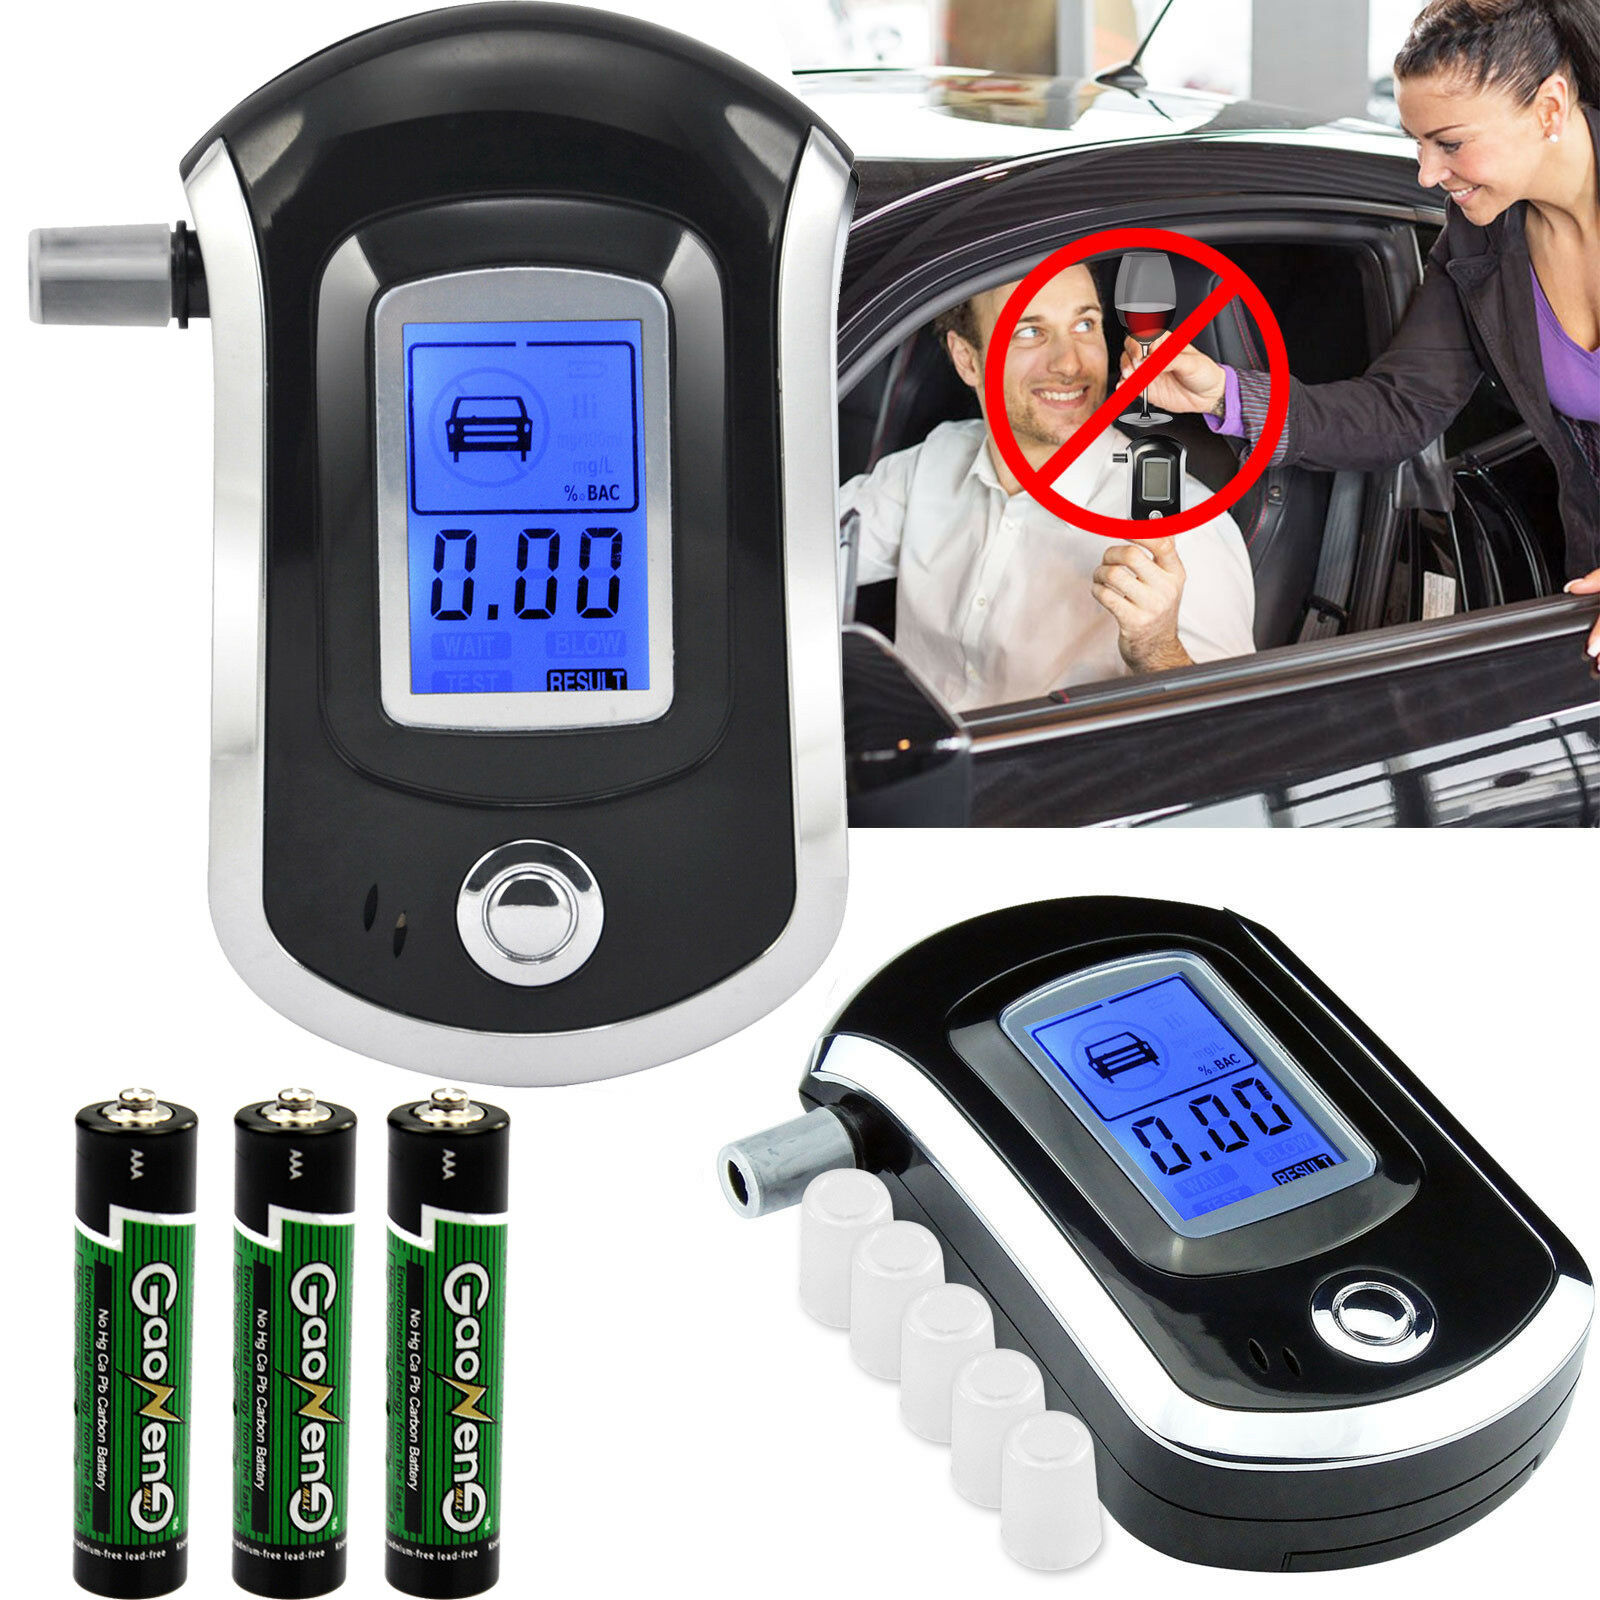 Advance Police Digital Breath Alcohol Tester Lcd Breathalyzer Analyzer Detector